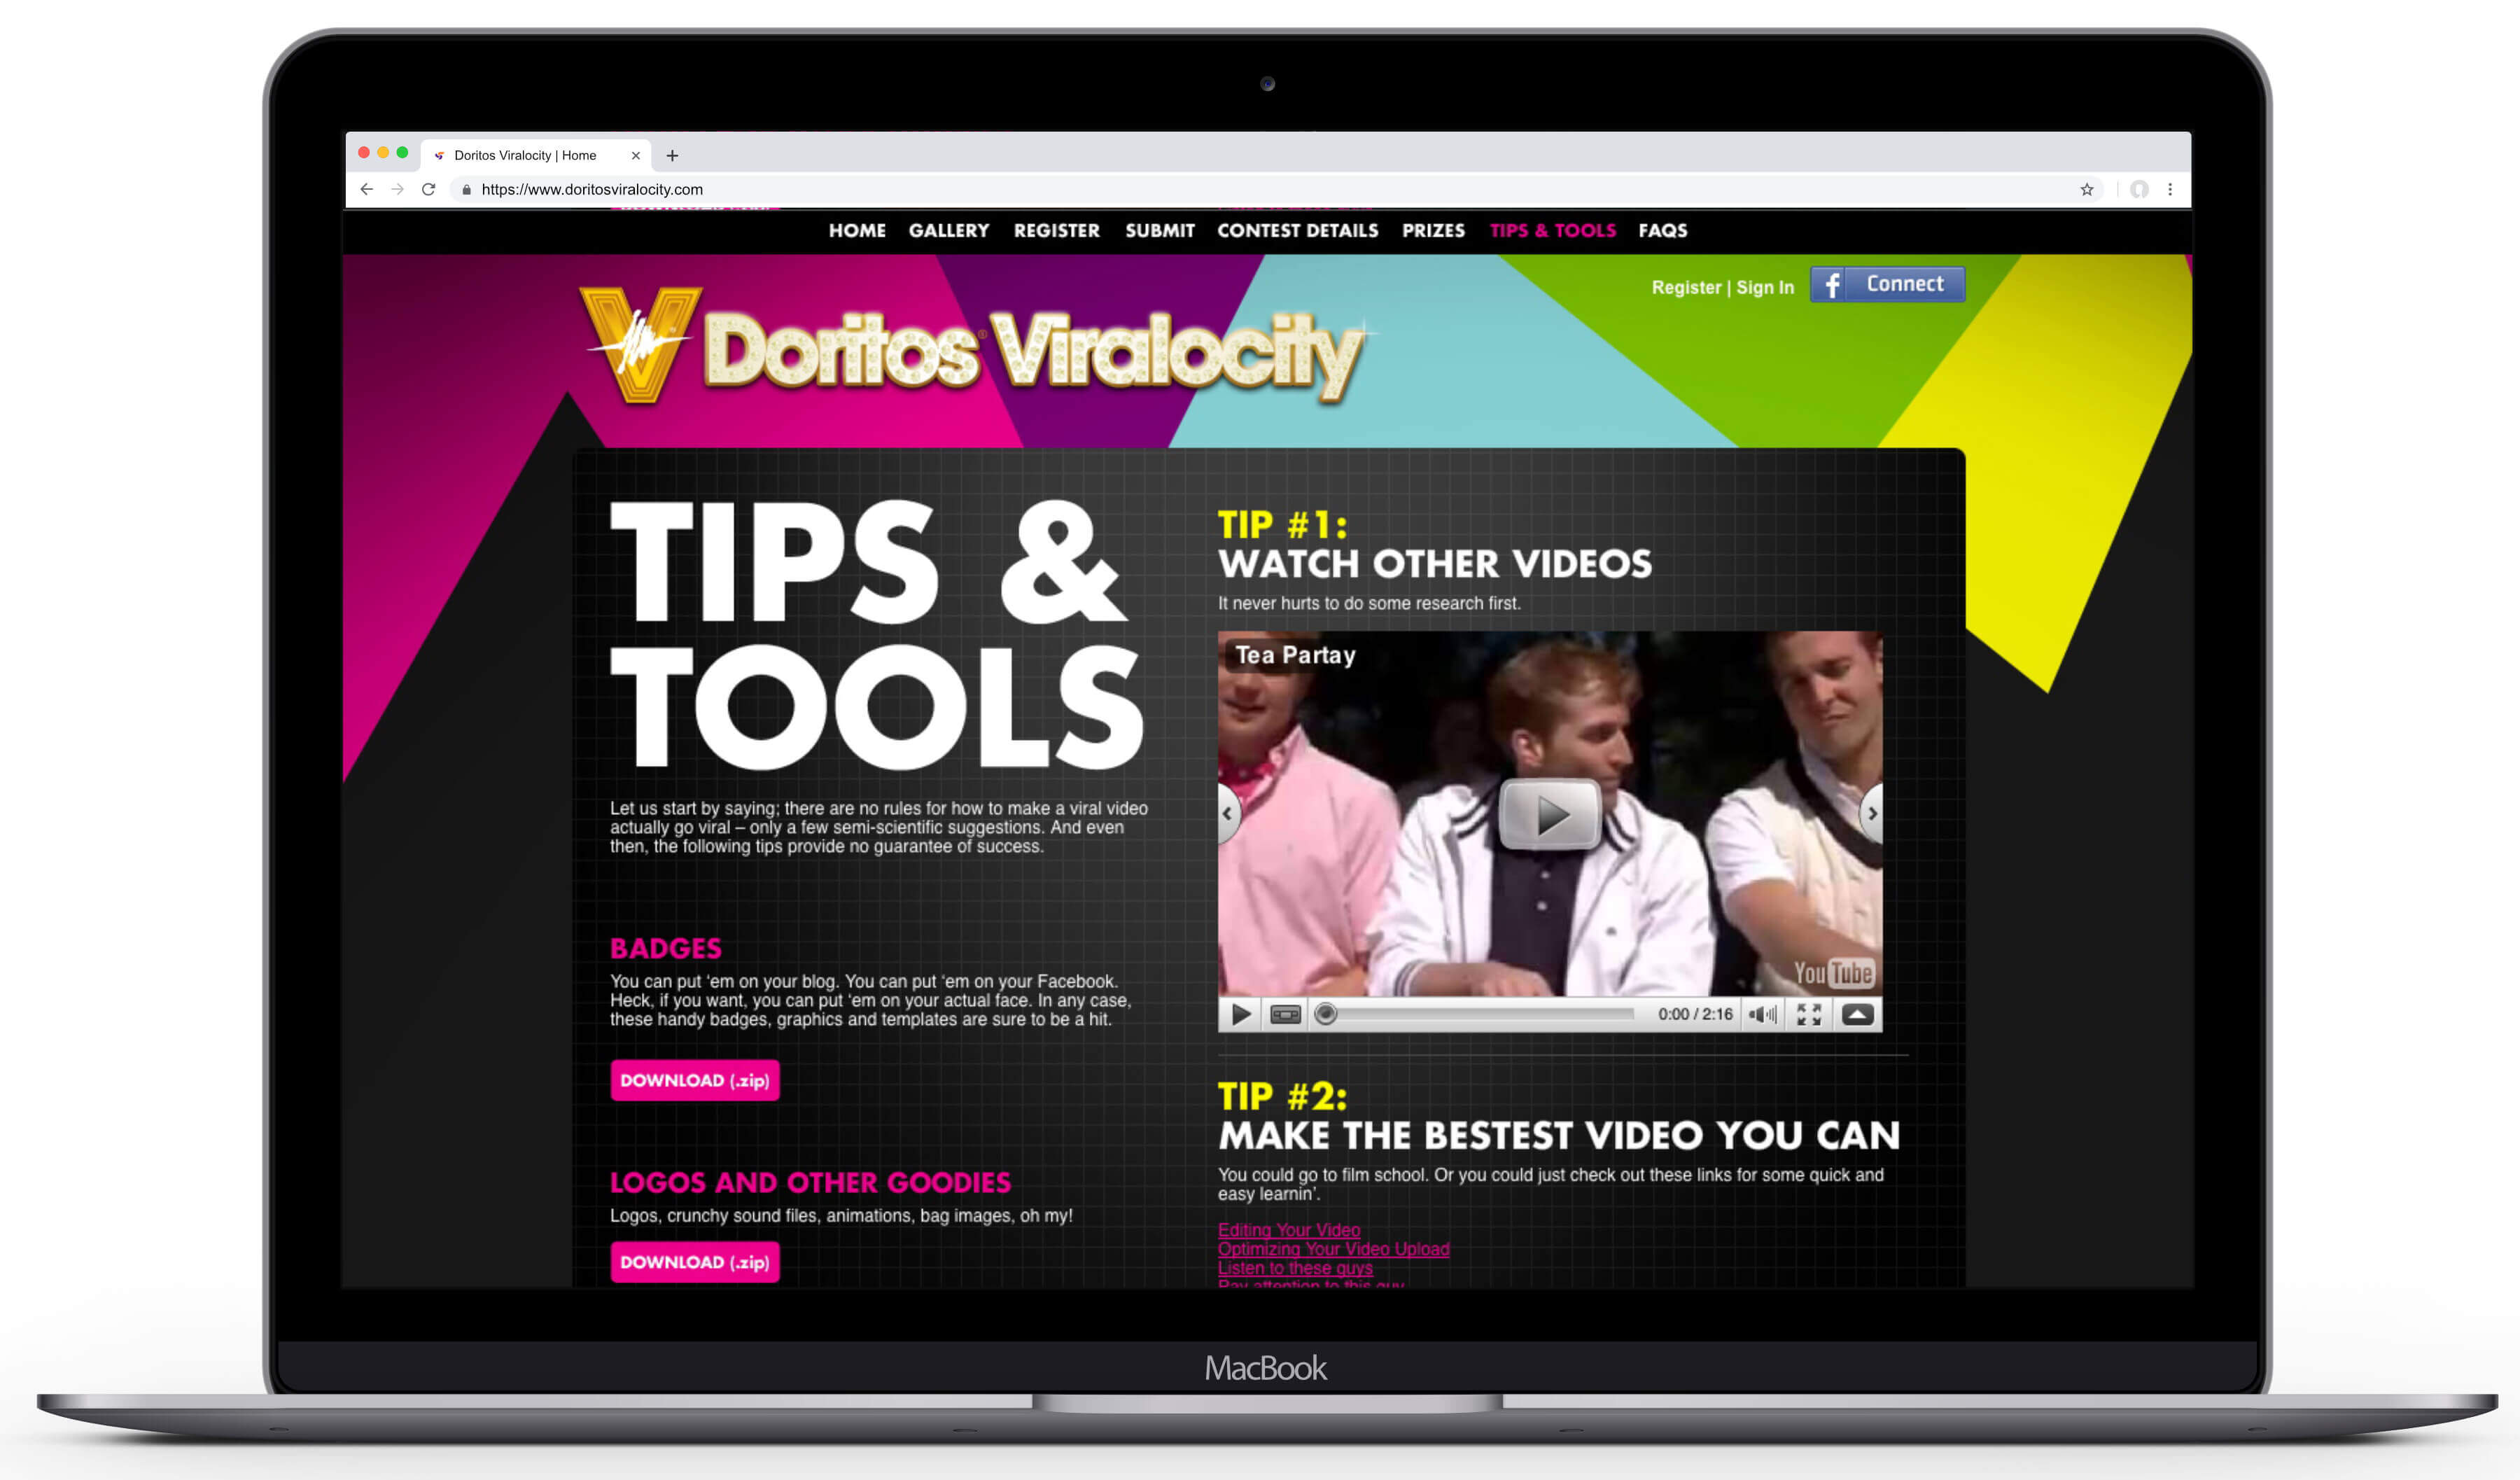 viralocity-screens-macbook-05-tips